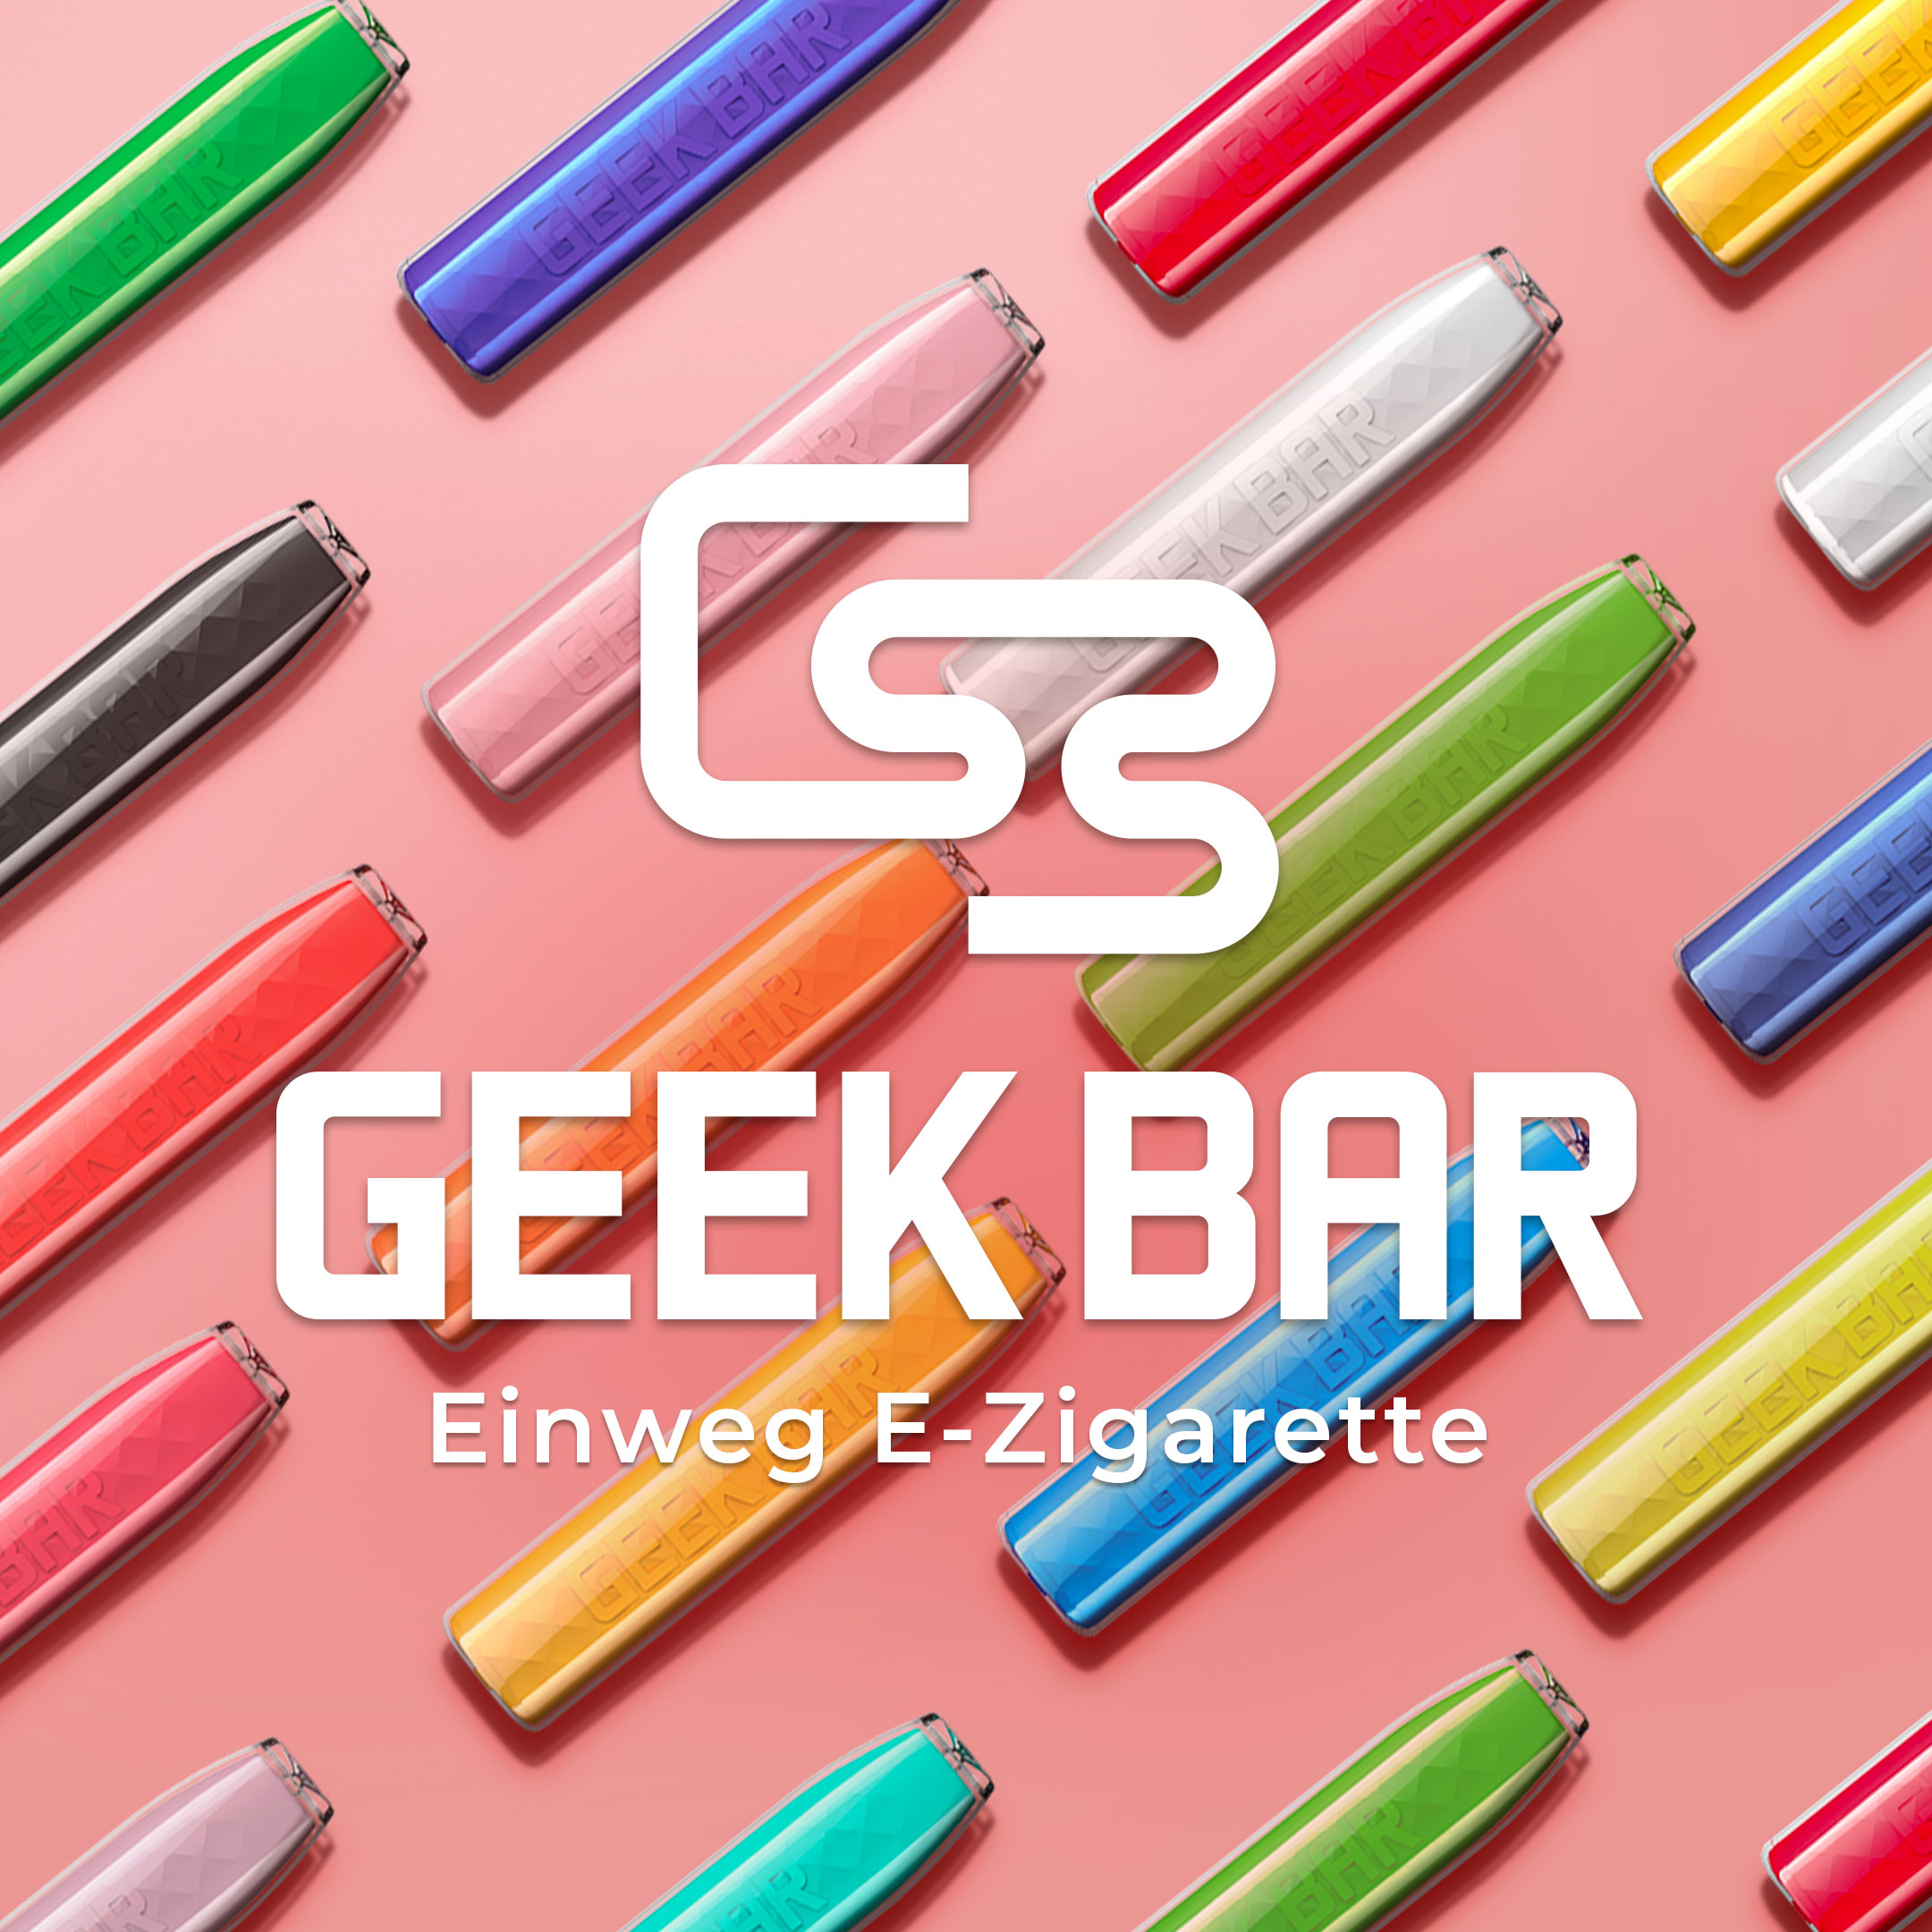 GEEKBAR by Geekvape - Einweg E-Zigarette Vape Pen 20mg/ml Mango ICE